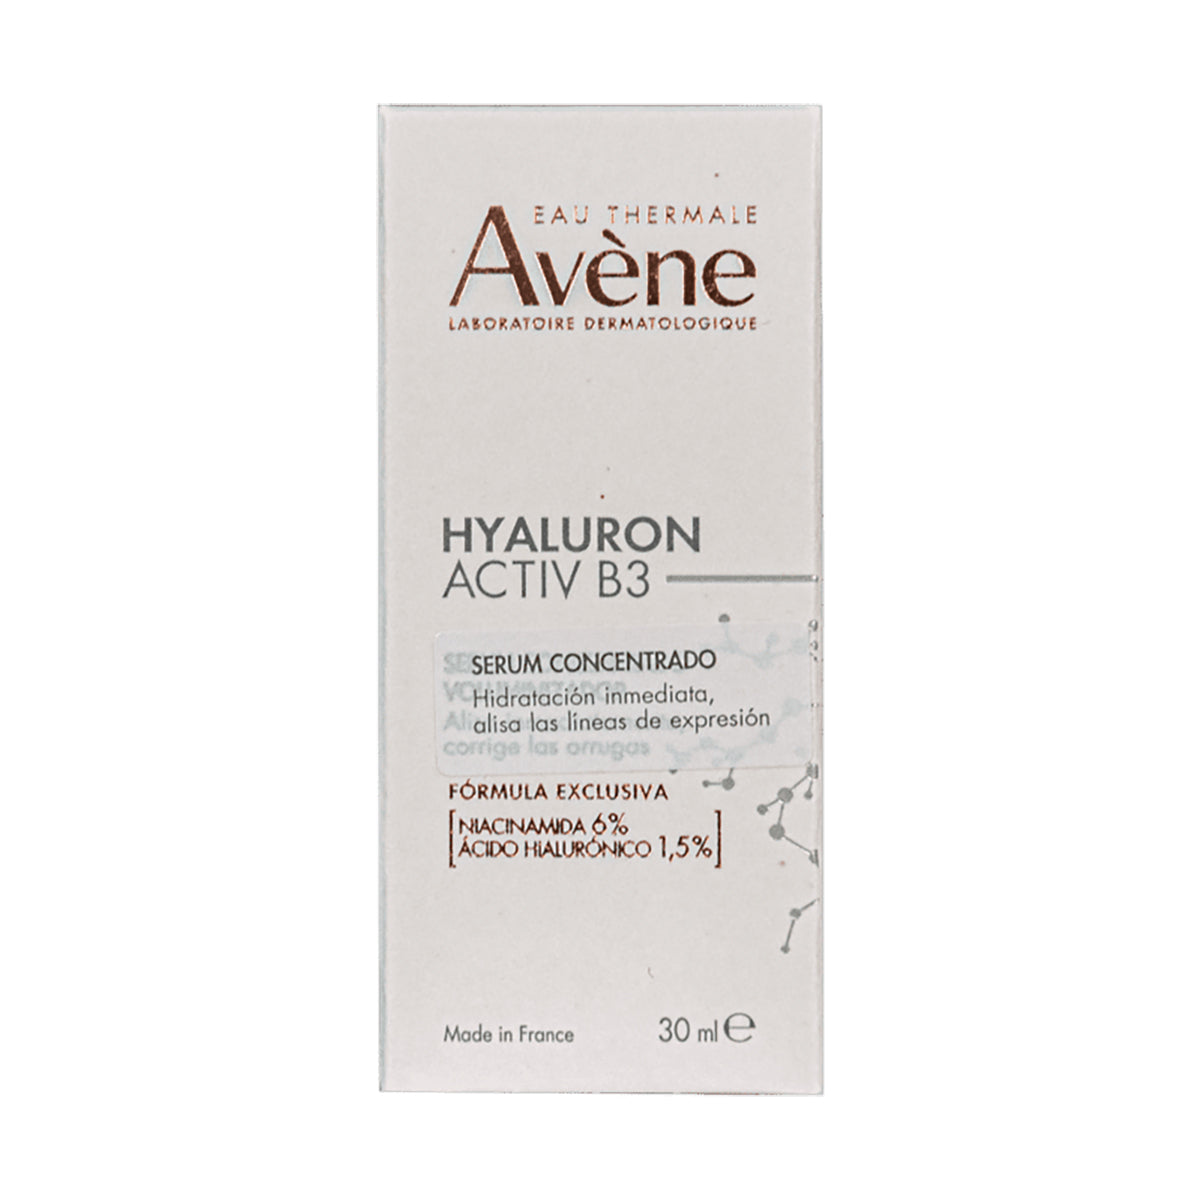 Avene Hyaluron activ B3 serum 30ml.